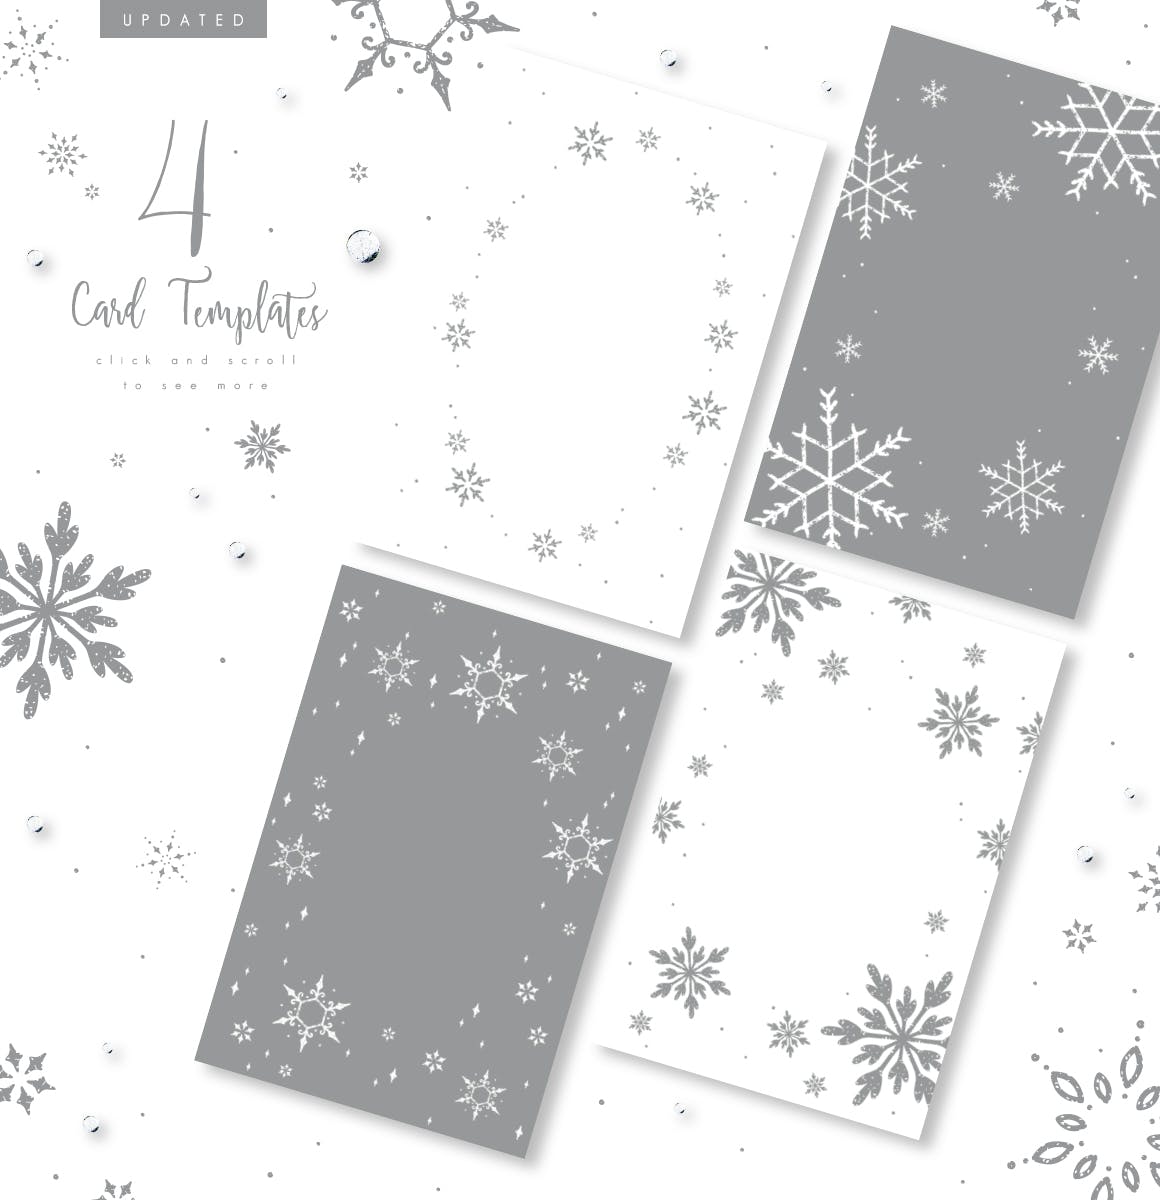 雪花之吻冬季主题手绘图案背景素材 UPDATED+ Snowflakes Winter Kisses插图(5)